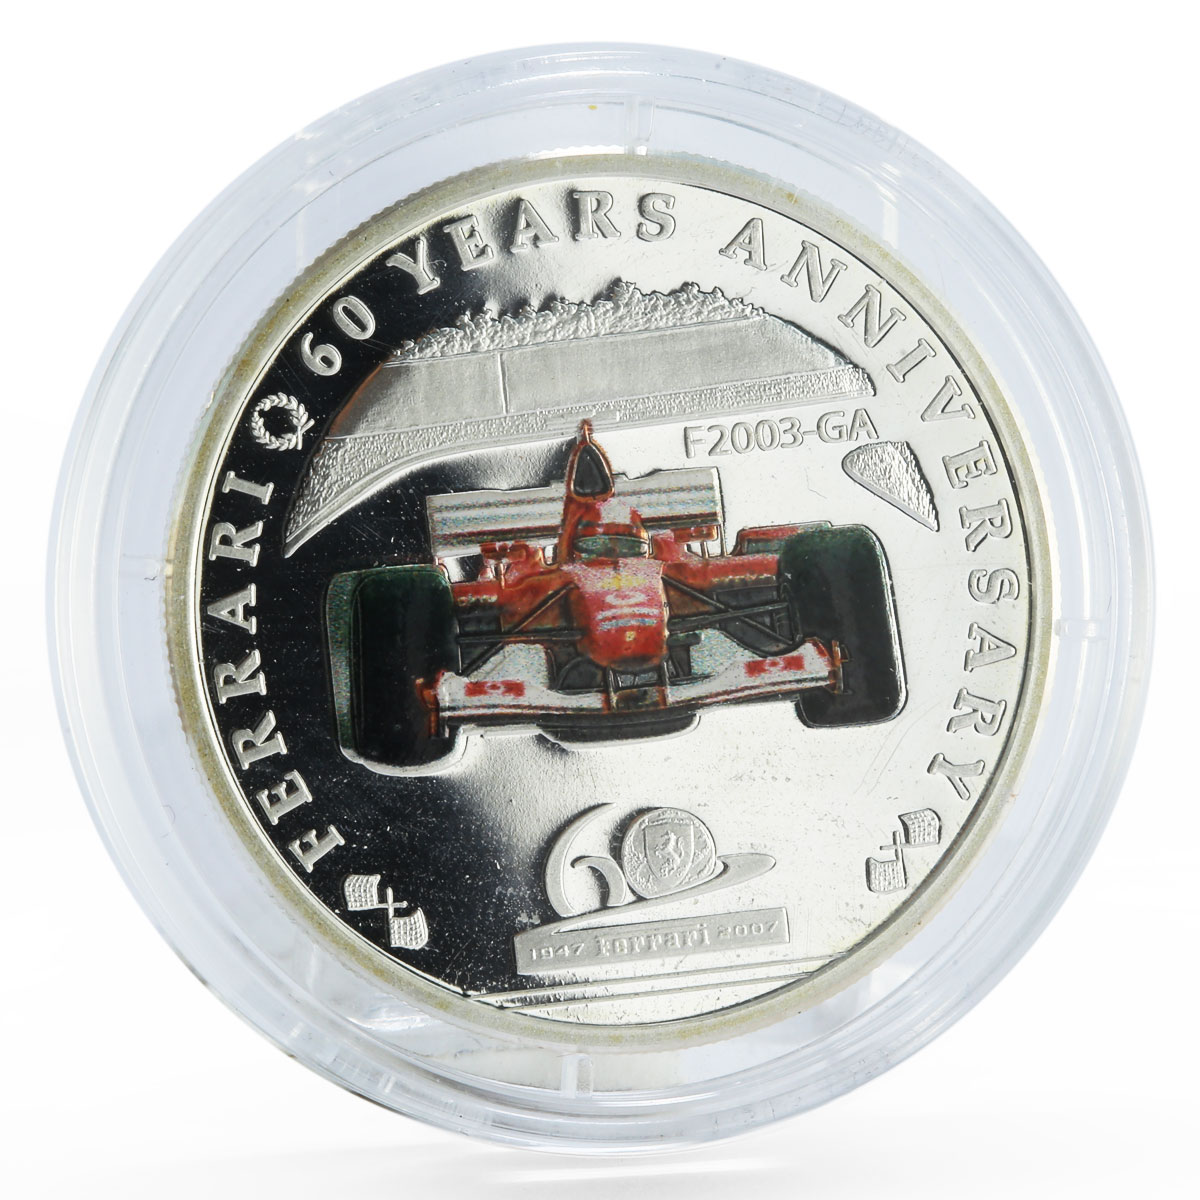 Palau 2 dollars 60th Anniversary of Ferrari F2003 GA Bolide silver coin 2007